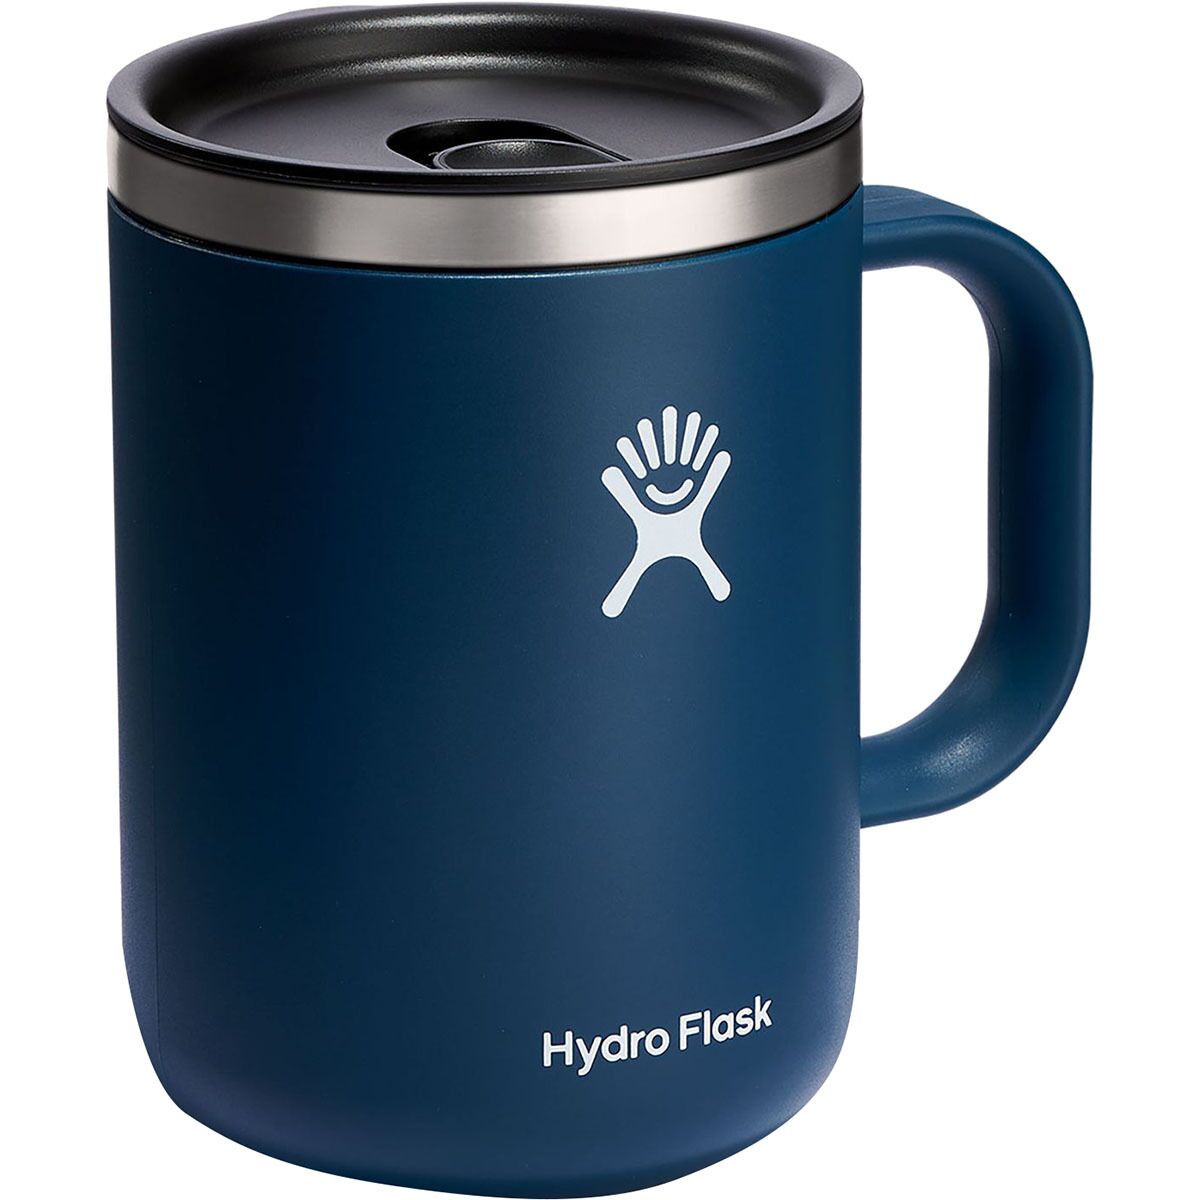 Hydro Flask, Kitchen, Nwt Hydro Flask 24 Oz Insulated Mug